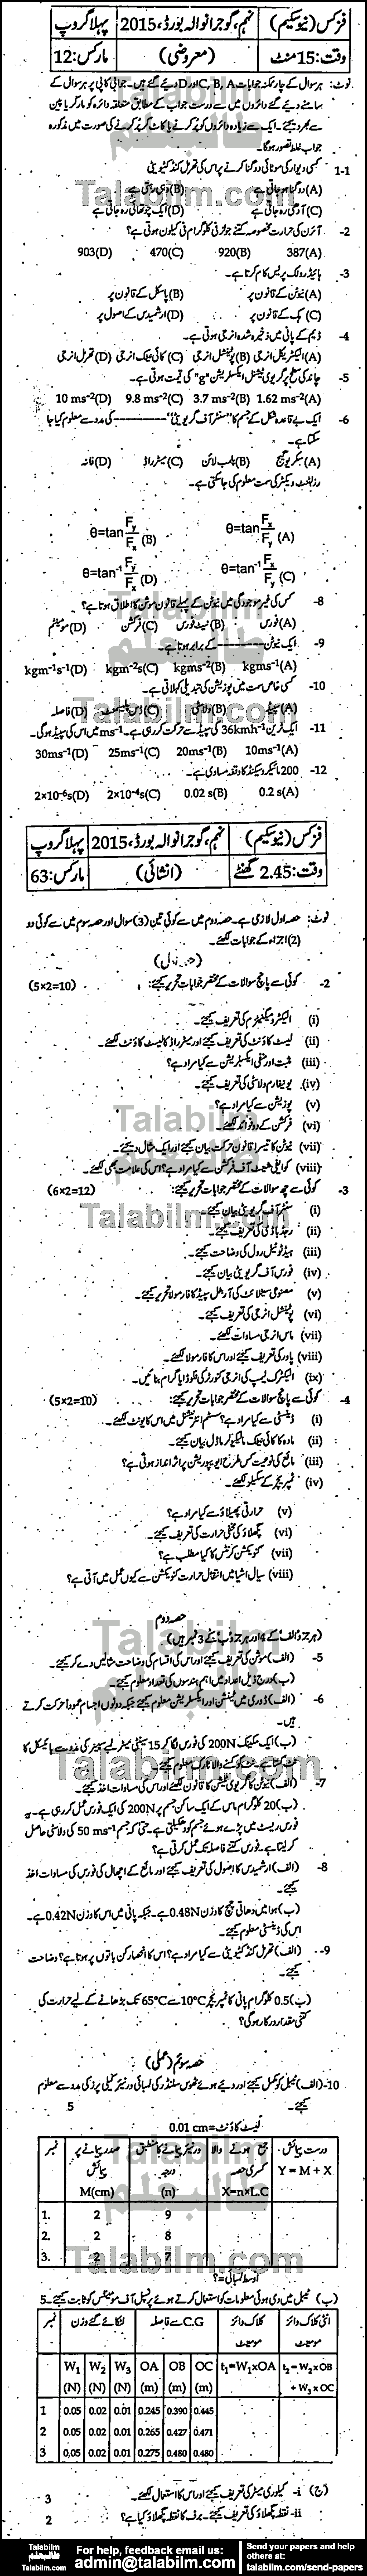 Physics 0 past paper for Urdu Medium 2015 Group-I